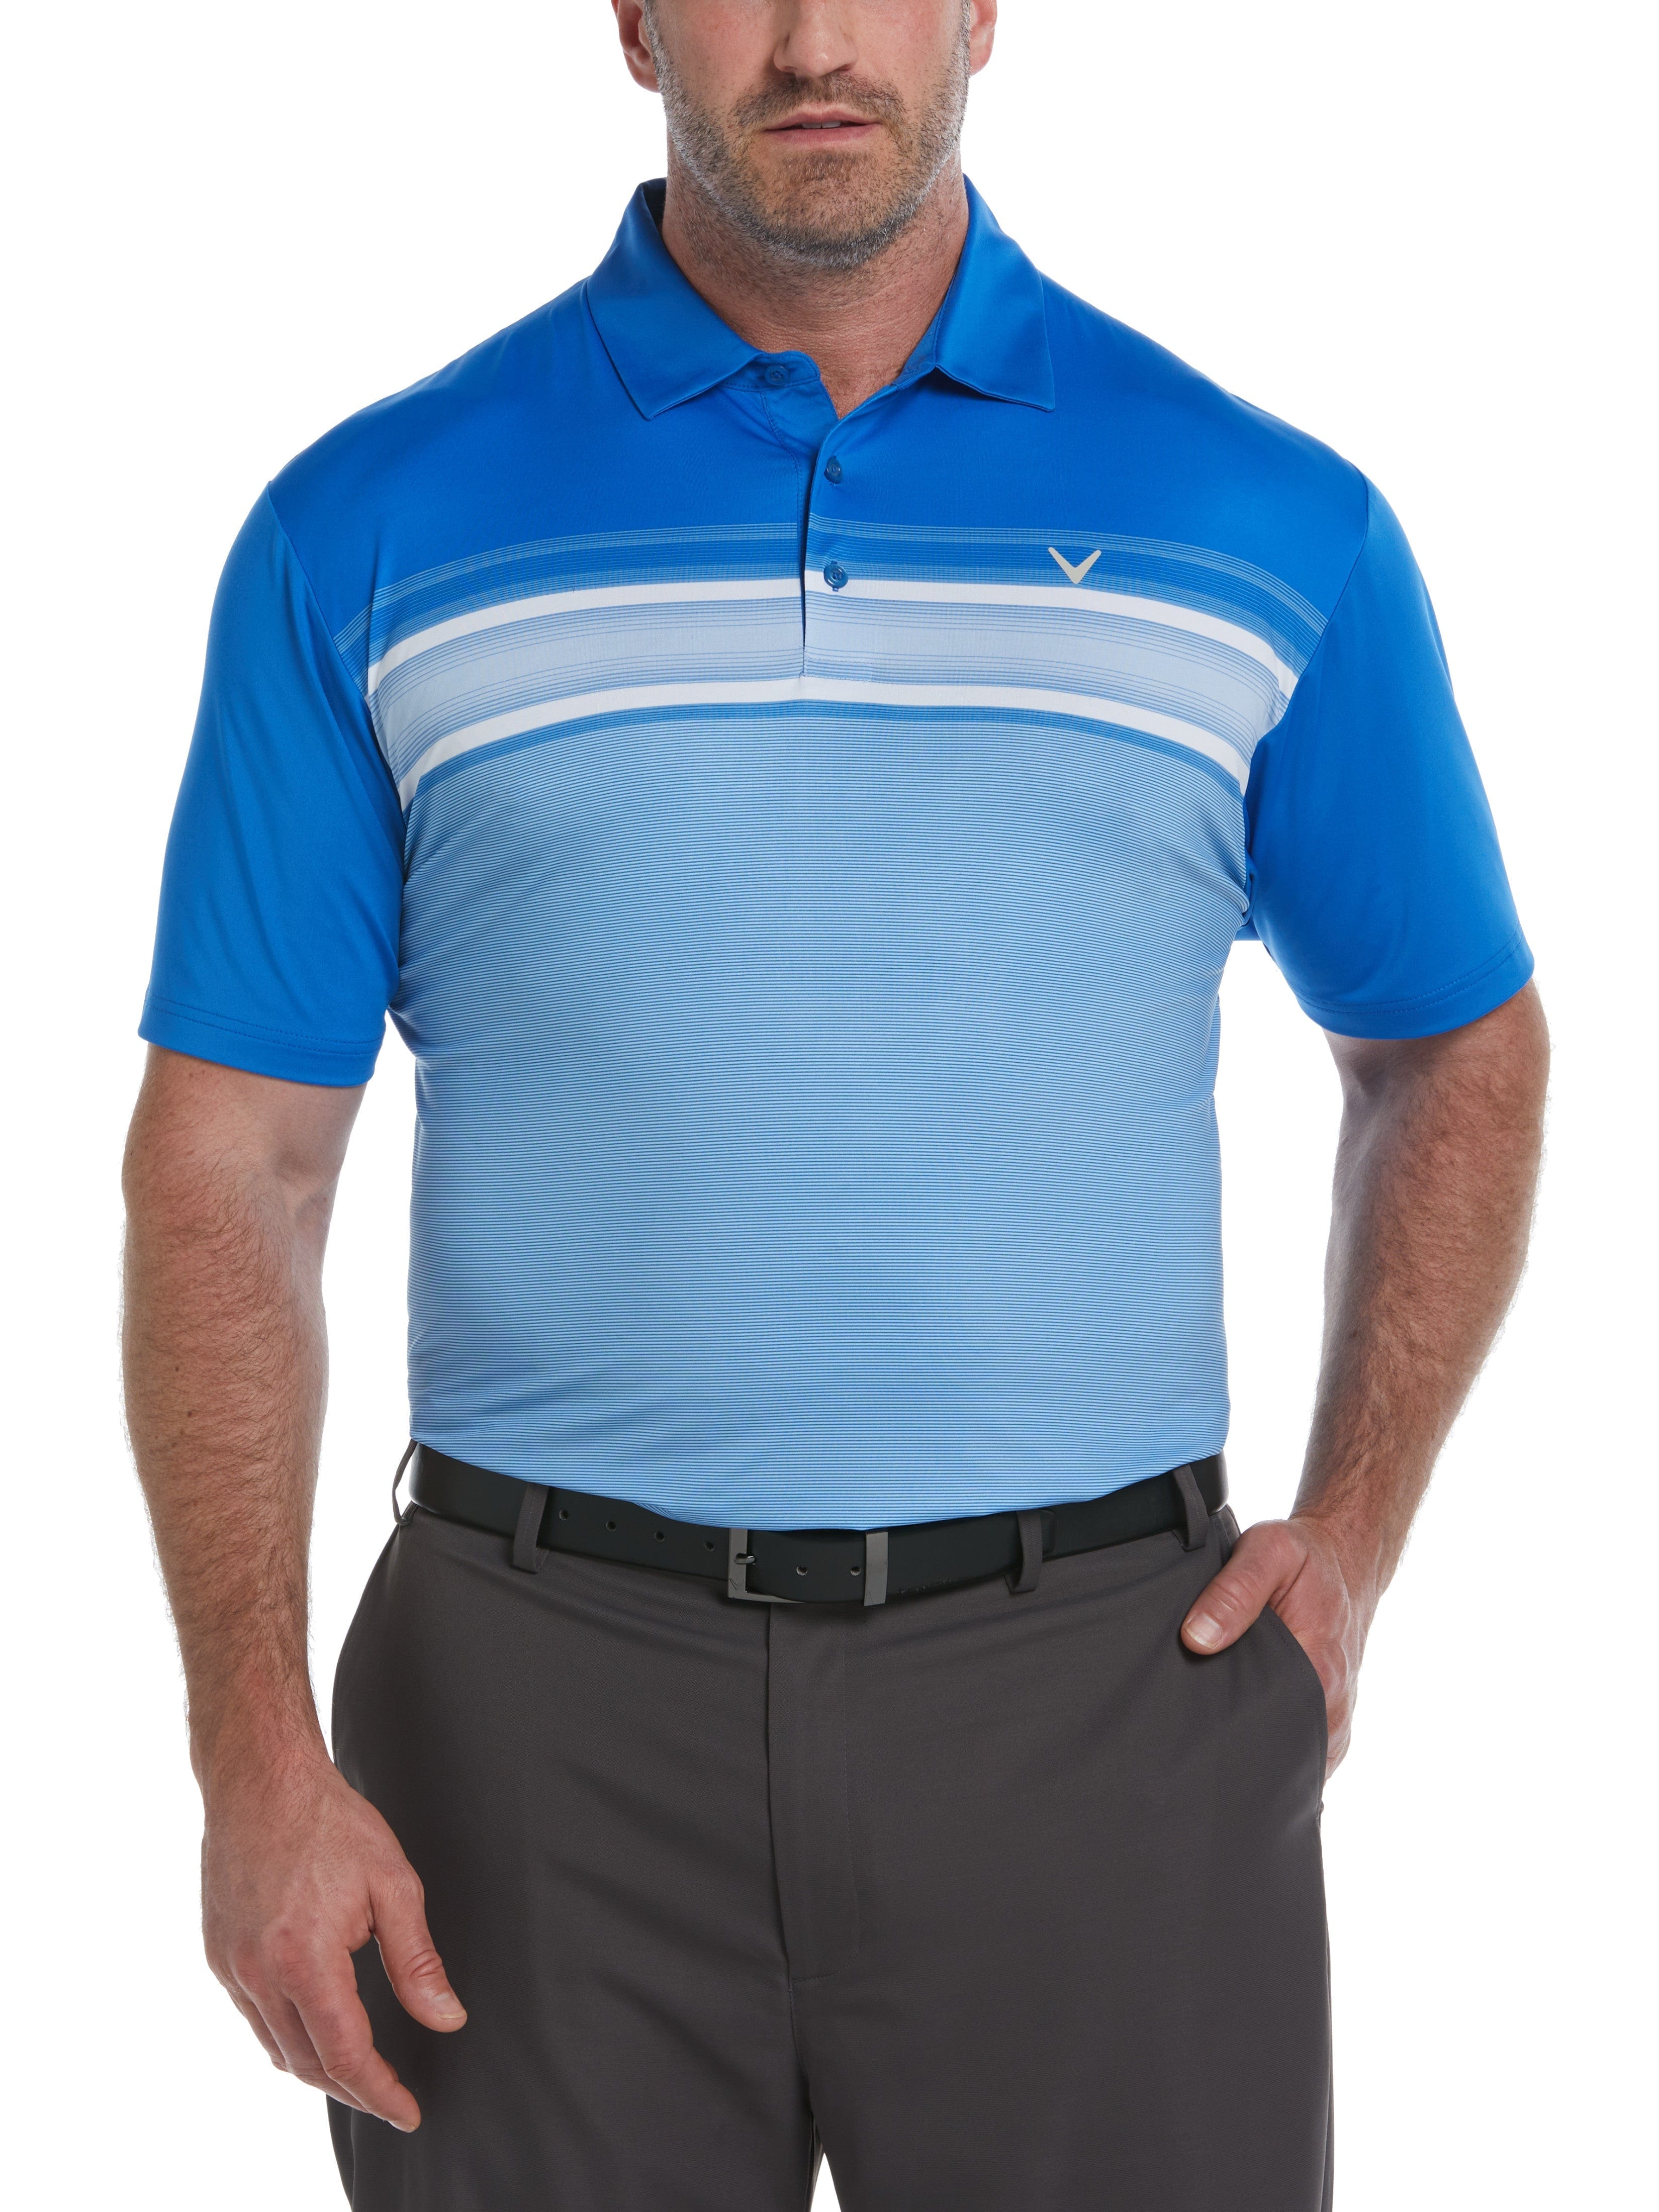 Callaway Apparel Mens Big & Tall Engineered Energy Print Stripe Golf Polo Shirt, Size LT, Magnetic Blue, Polyester/Spandex | Golf Apparel Shop